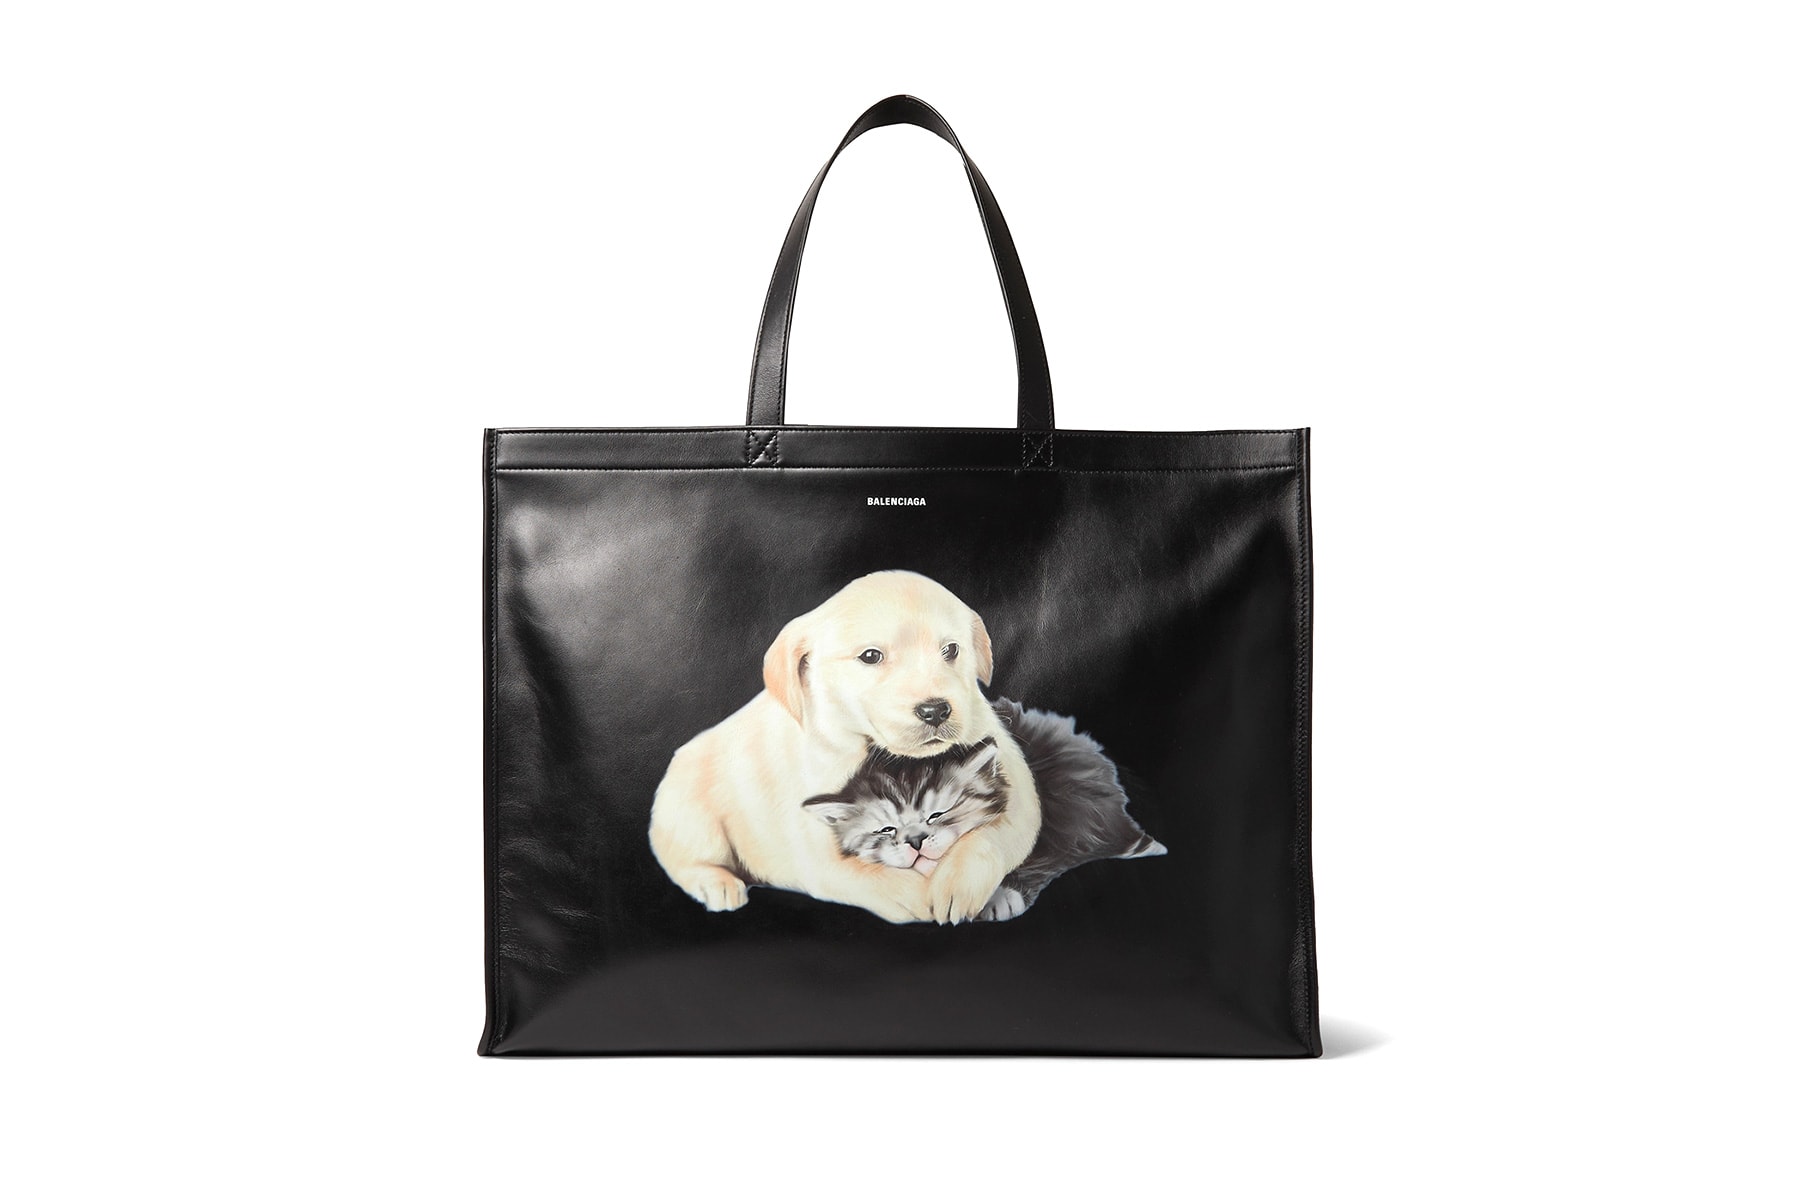 balenciaga animal printed leather tote bag fashion 2018 september mr porter puppy kitten